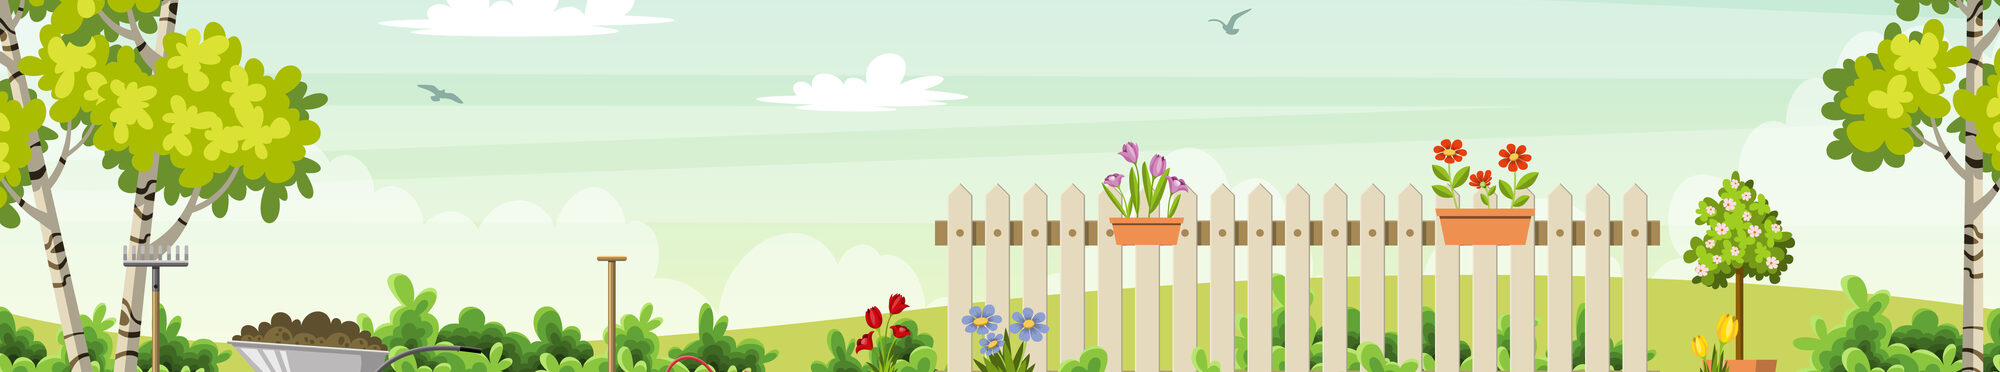 Spring,Landscape,With,Garden,Tools,,Vector,Illustration